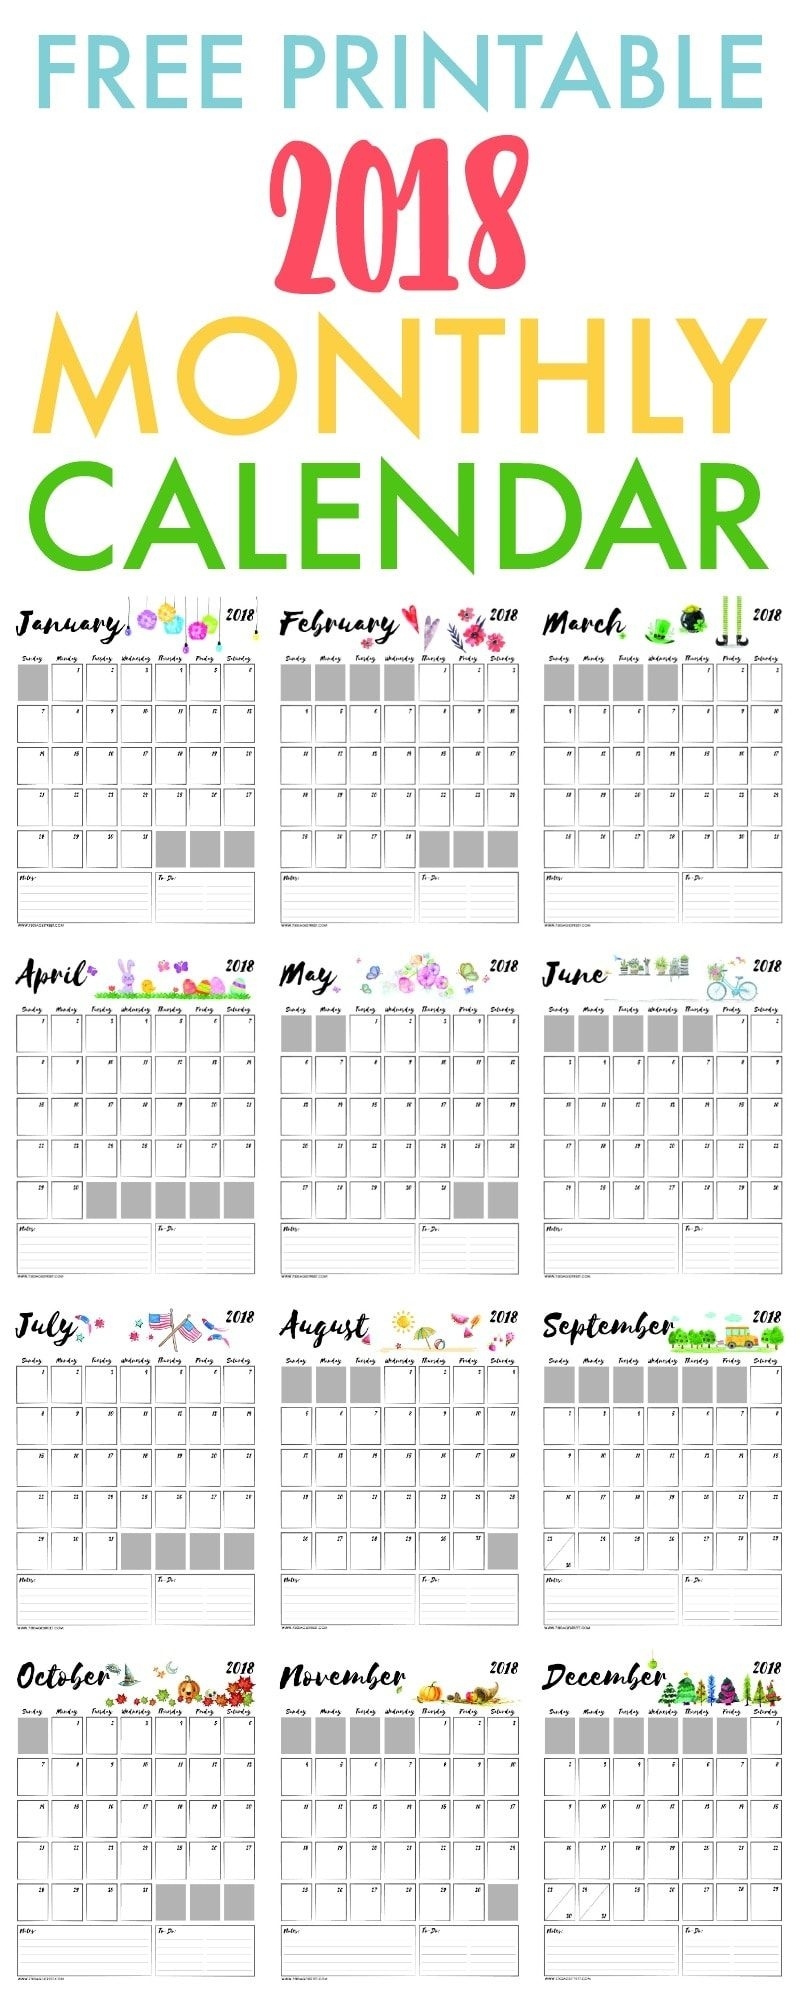 Free Printable Calendar 2018 - Free Pdf Monthly Calendar Download Monthly Calendar Bulletin Board